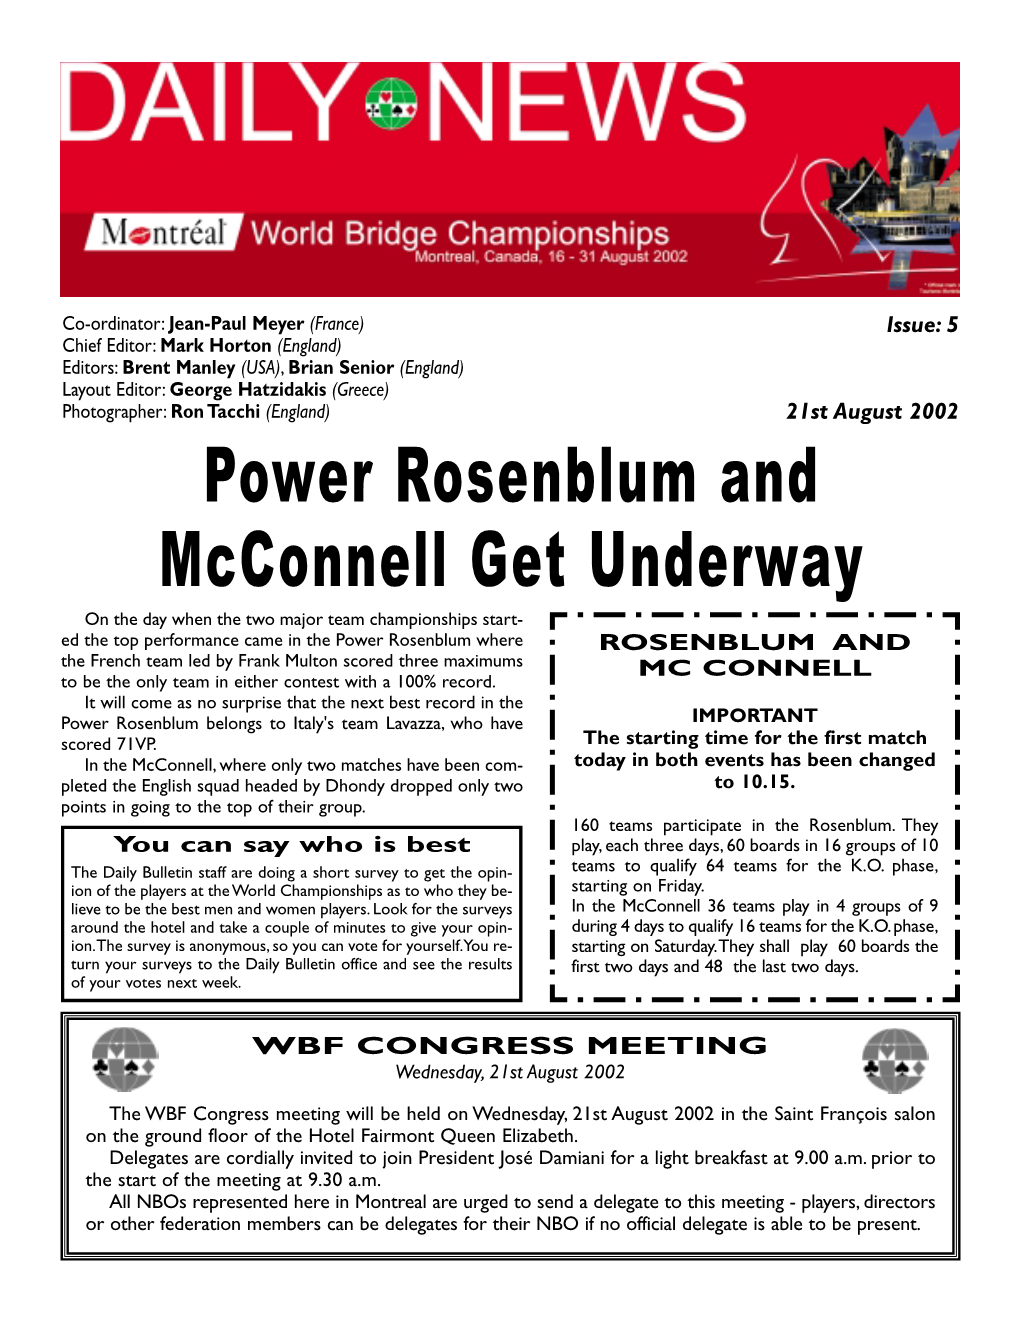 Power Rosenblum and Mcconnell Get Underway